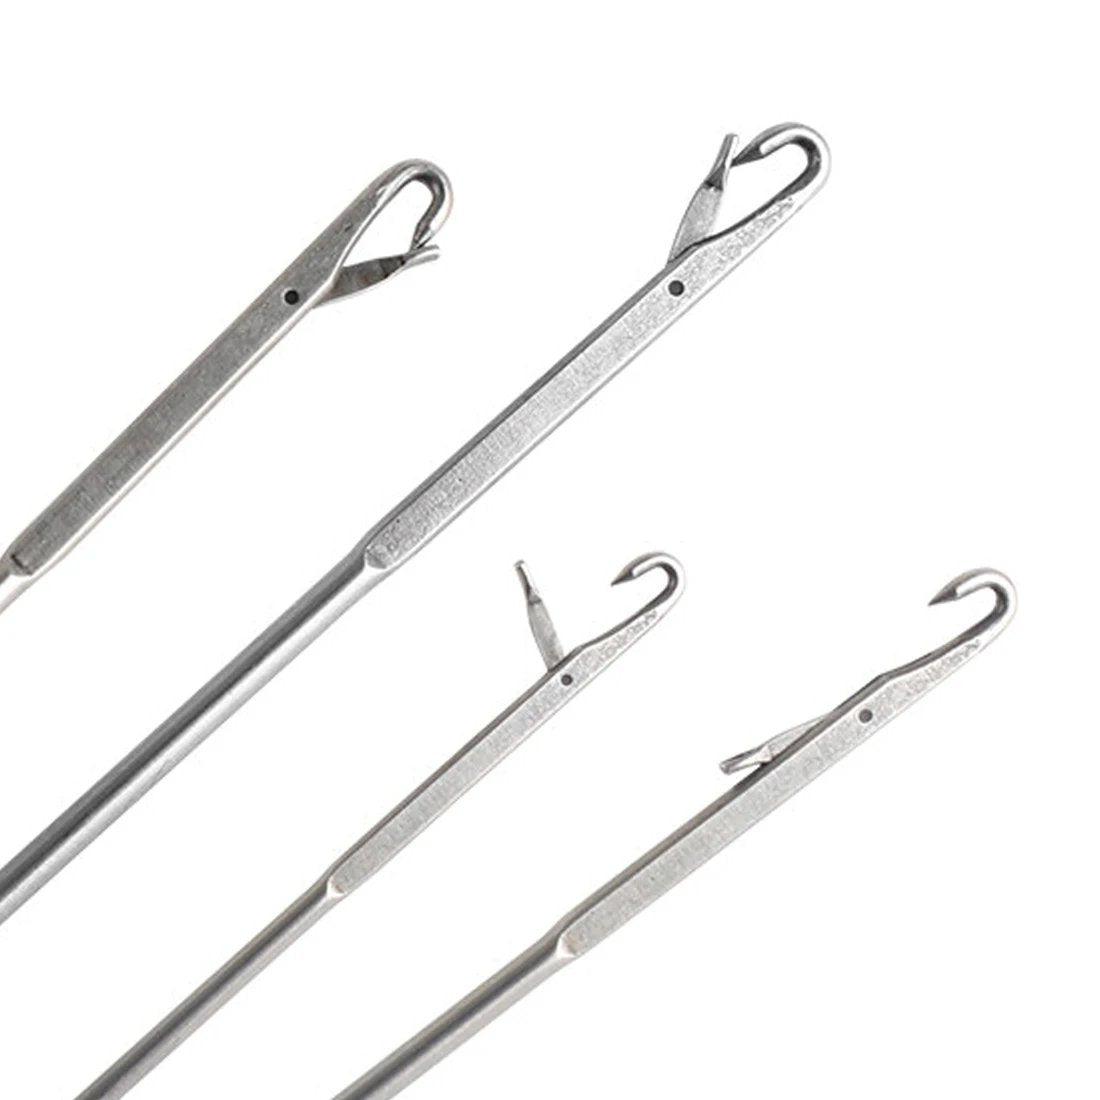 9KM 5Pcs Bait Needles Carp Fishing Accessories Reverse Latch Needle Rigging Needle Fishing Assist Cord Ring Splicing